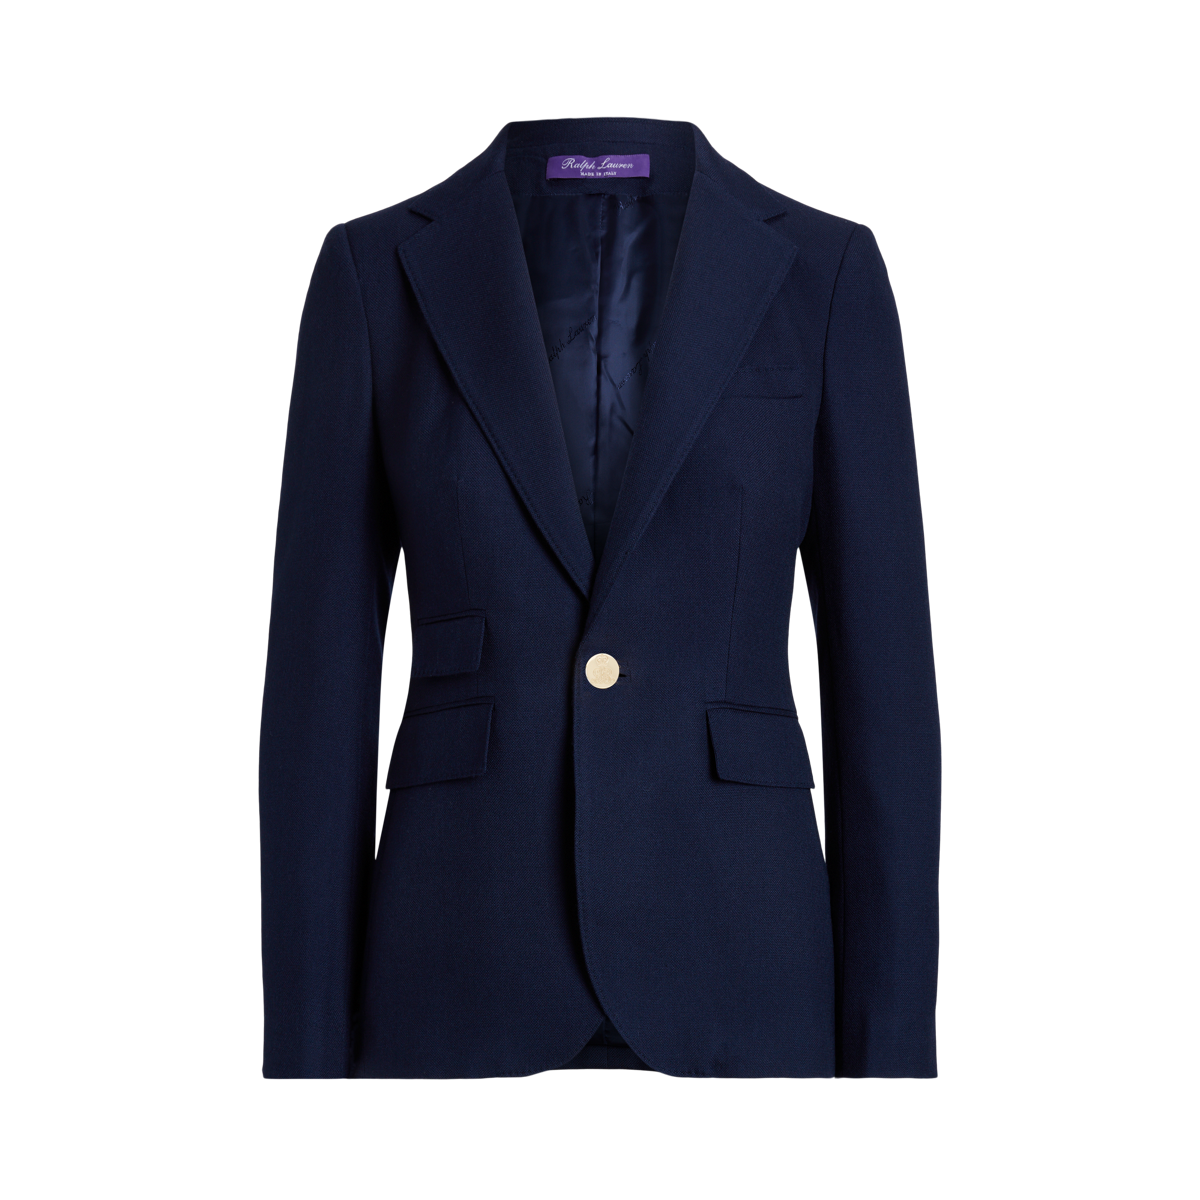 Cashmere Coat Ralph Lauren Sale | website.jkuat.ac.ke